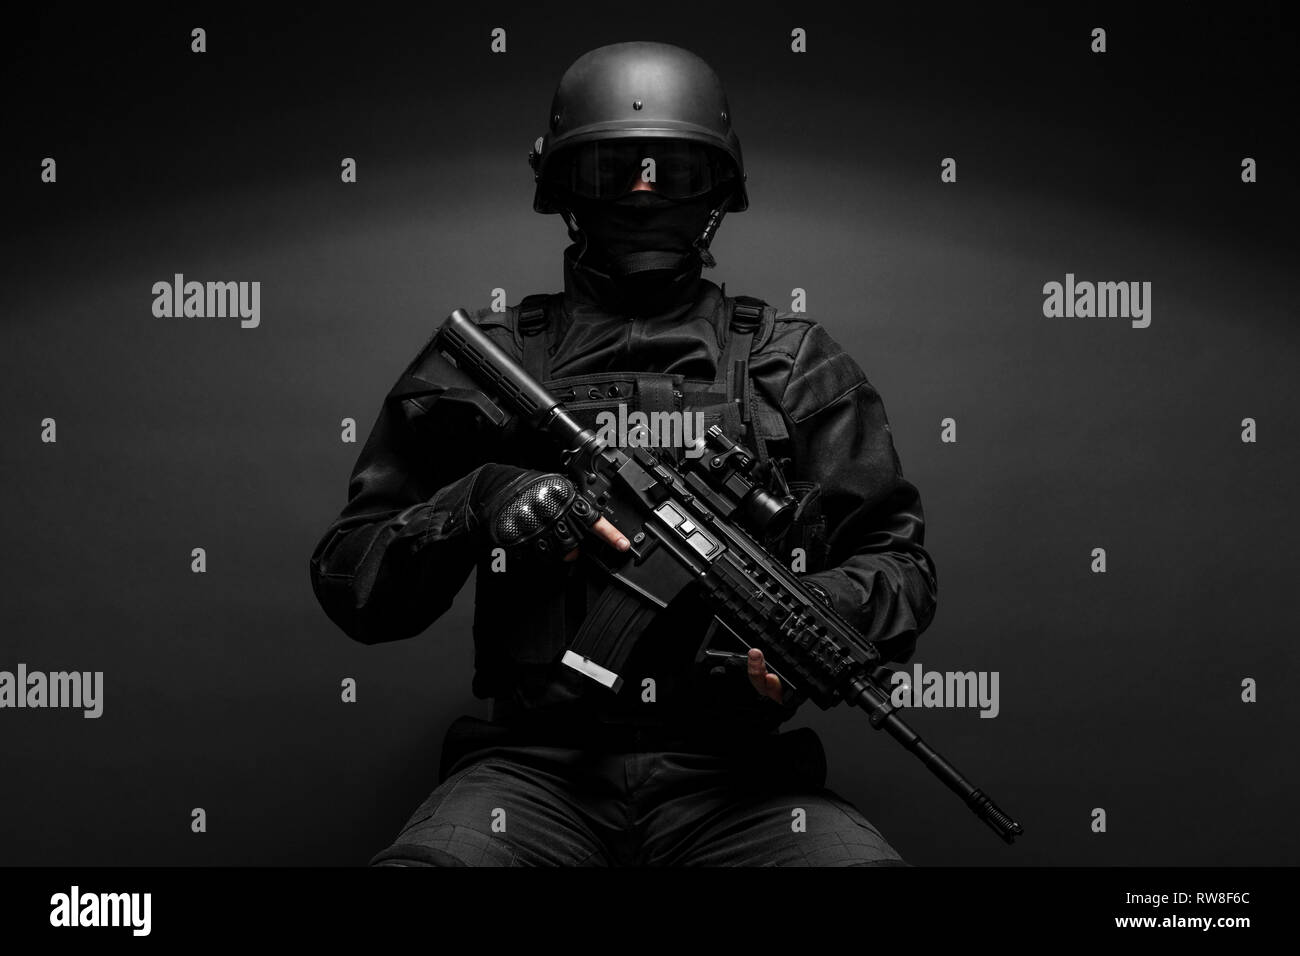 Spec ops police officer SWAT in black uniform Stock Photo - Alamy